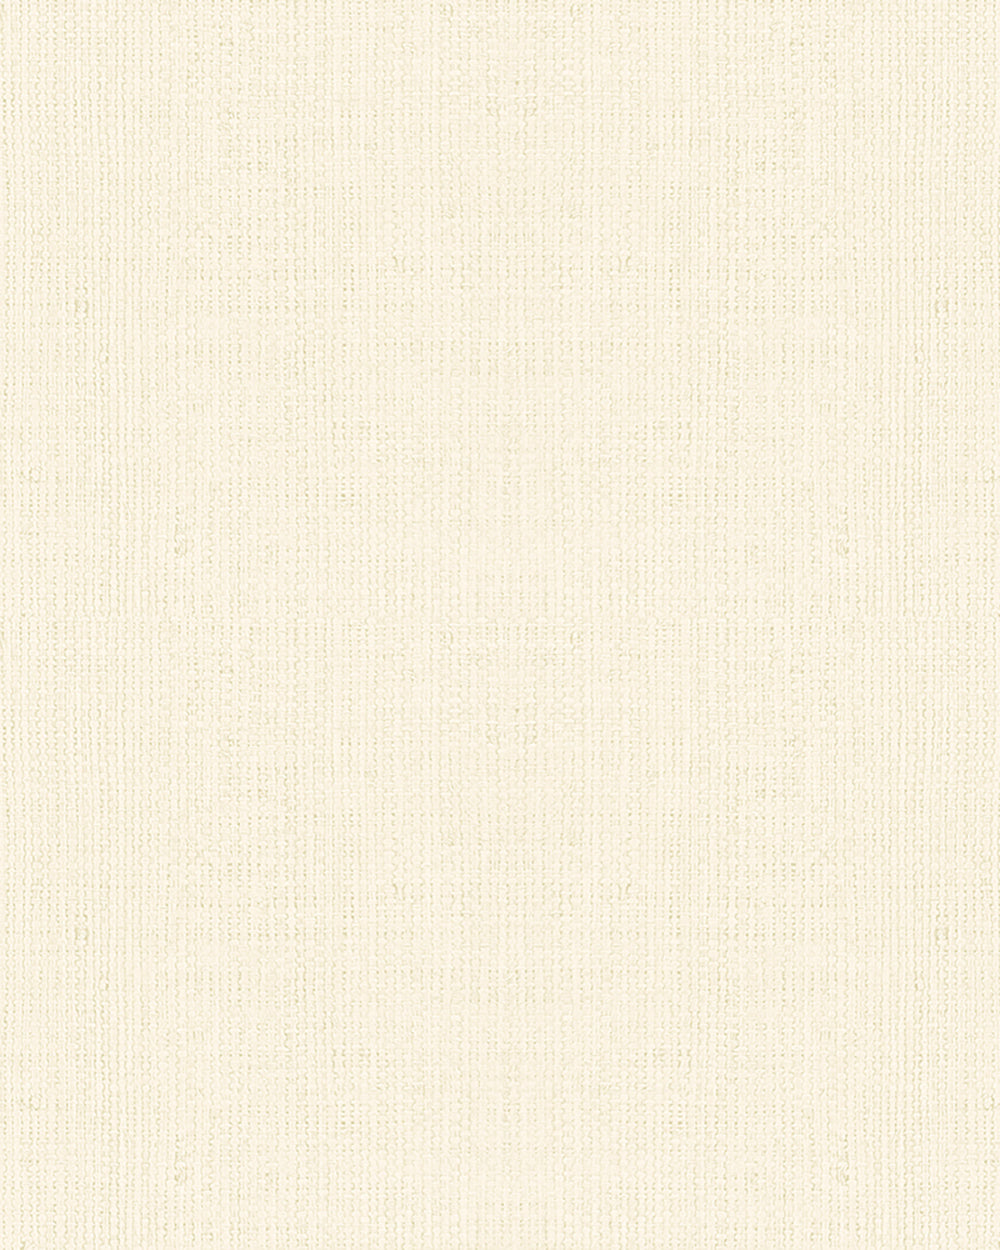 Casual - Textured Rattan Plains plain wallpaper Marburg Roll Yellow  30460